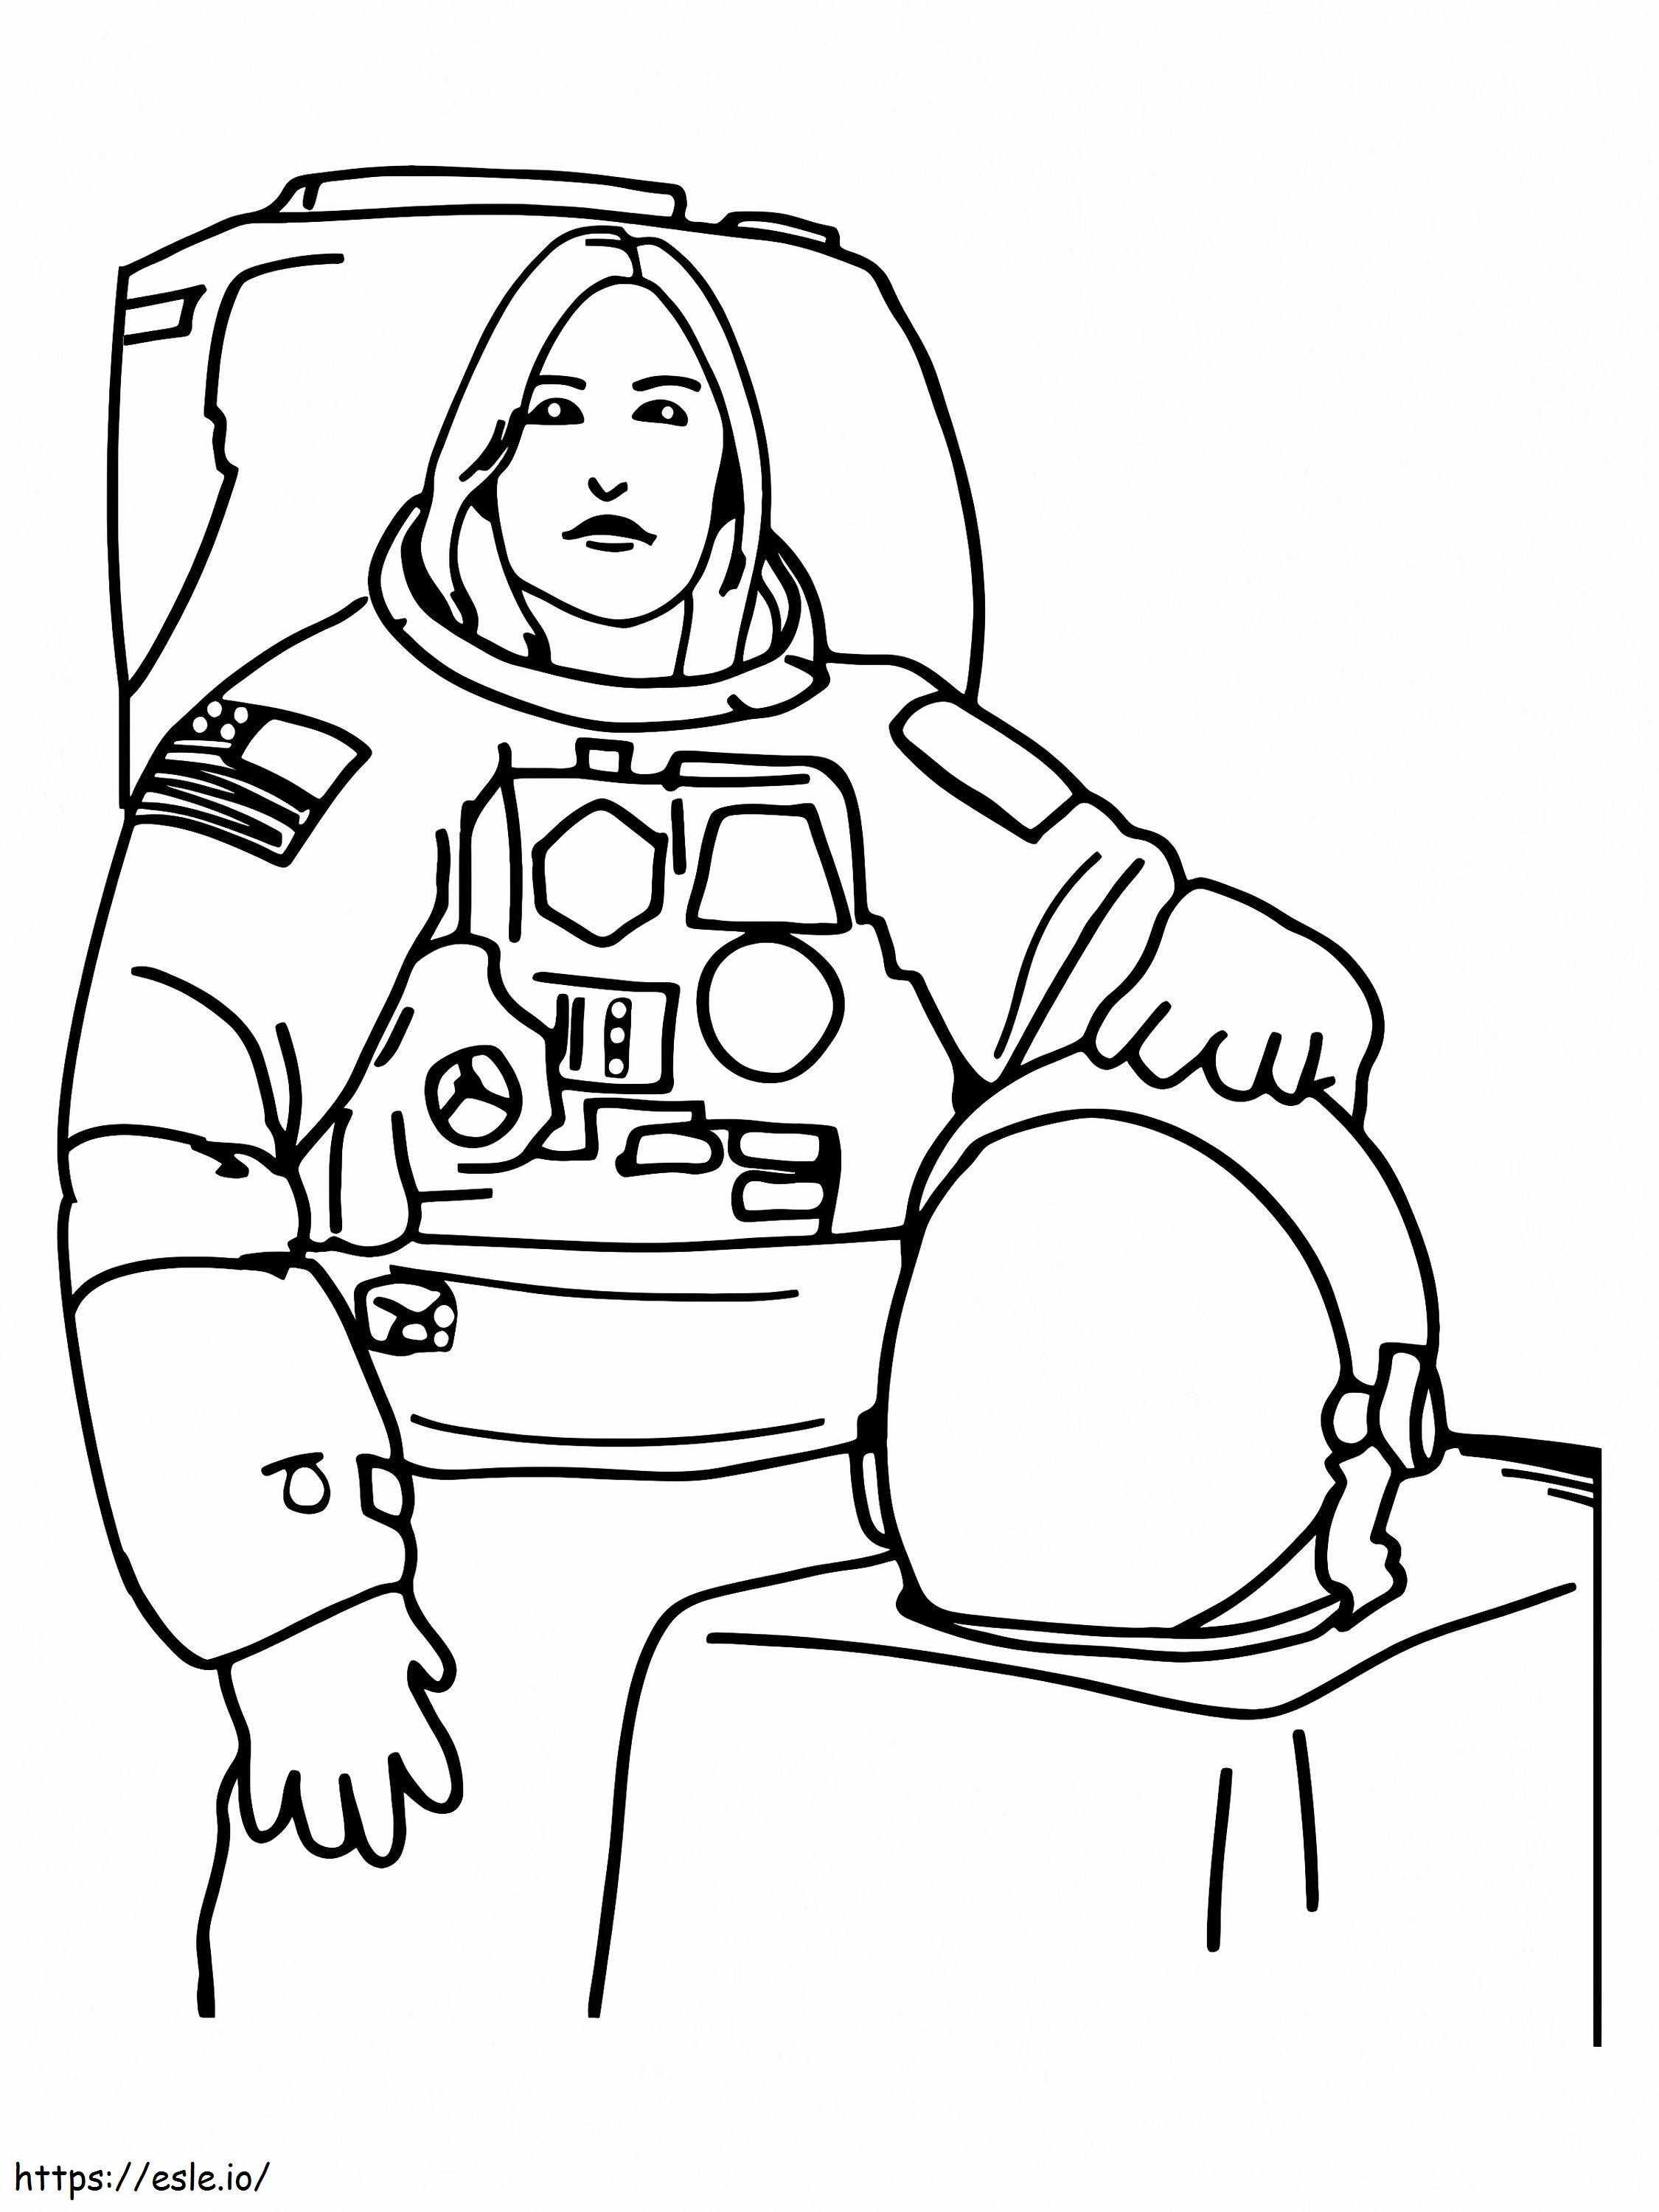 NASAの女性宇宙飛行士 ぬりえ - 塗り絵